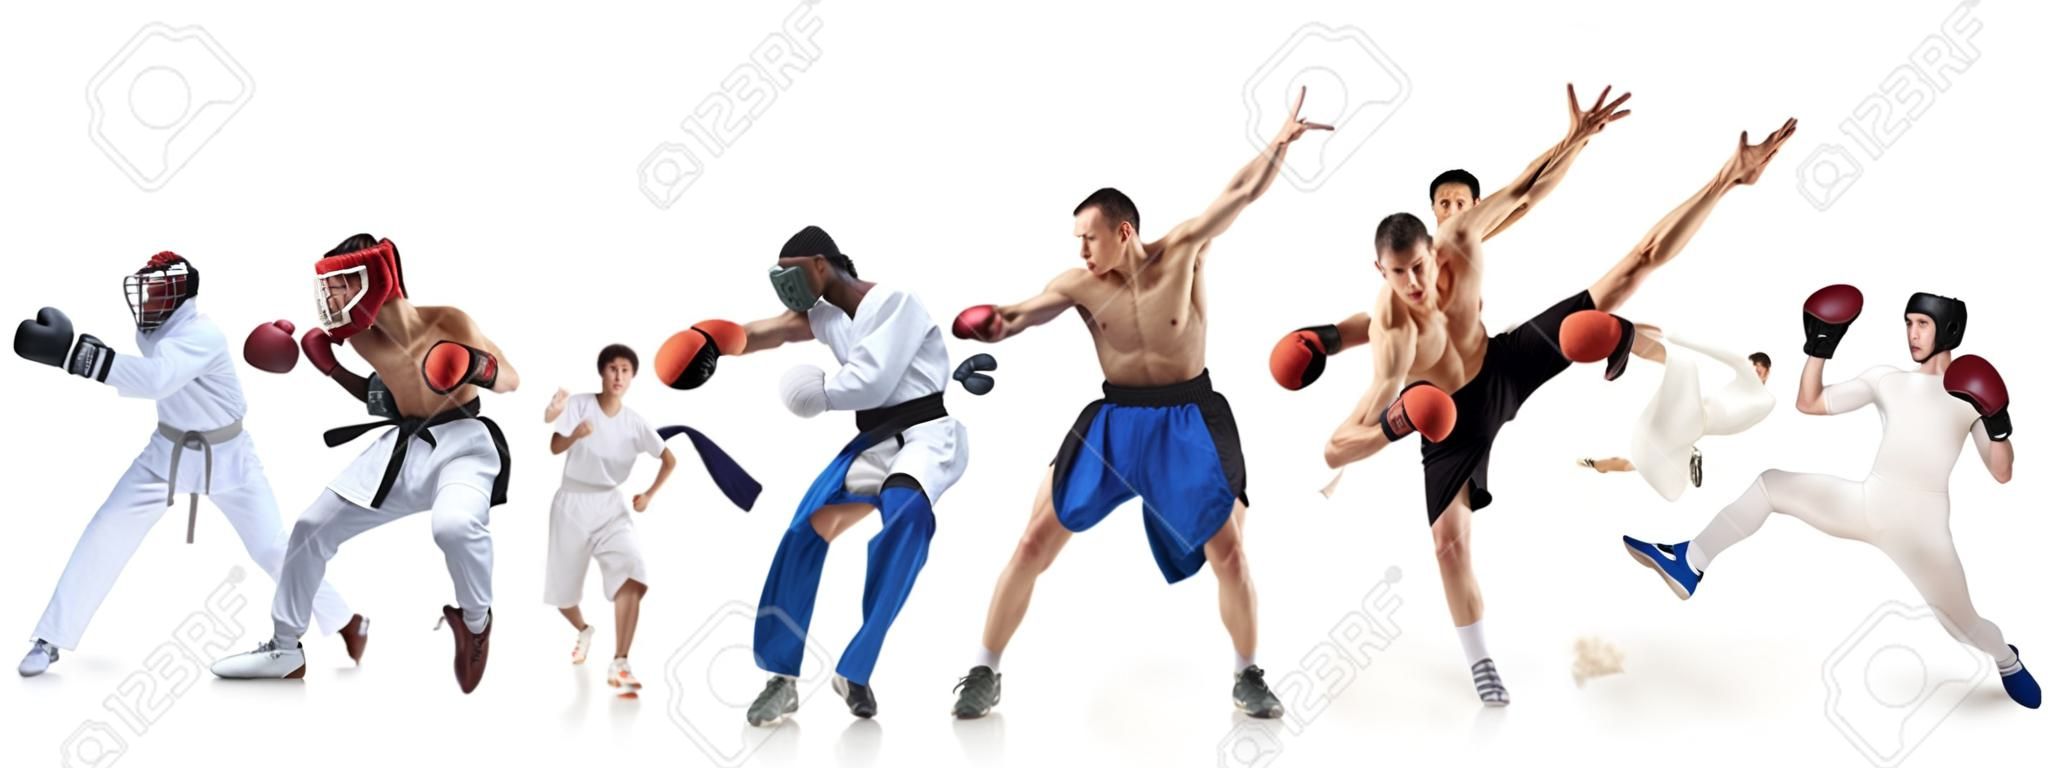 Collage sportivi su boxe, calcio, football americano, pallacanestro, hockey su ghiaccio, scherma, jogging, taekwondo, tennis